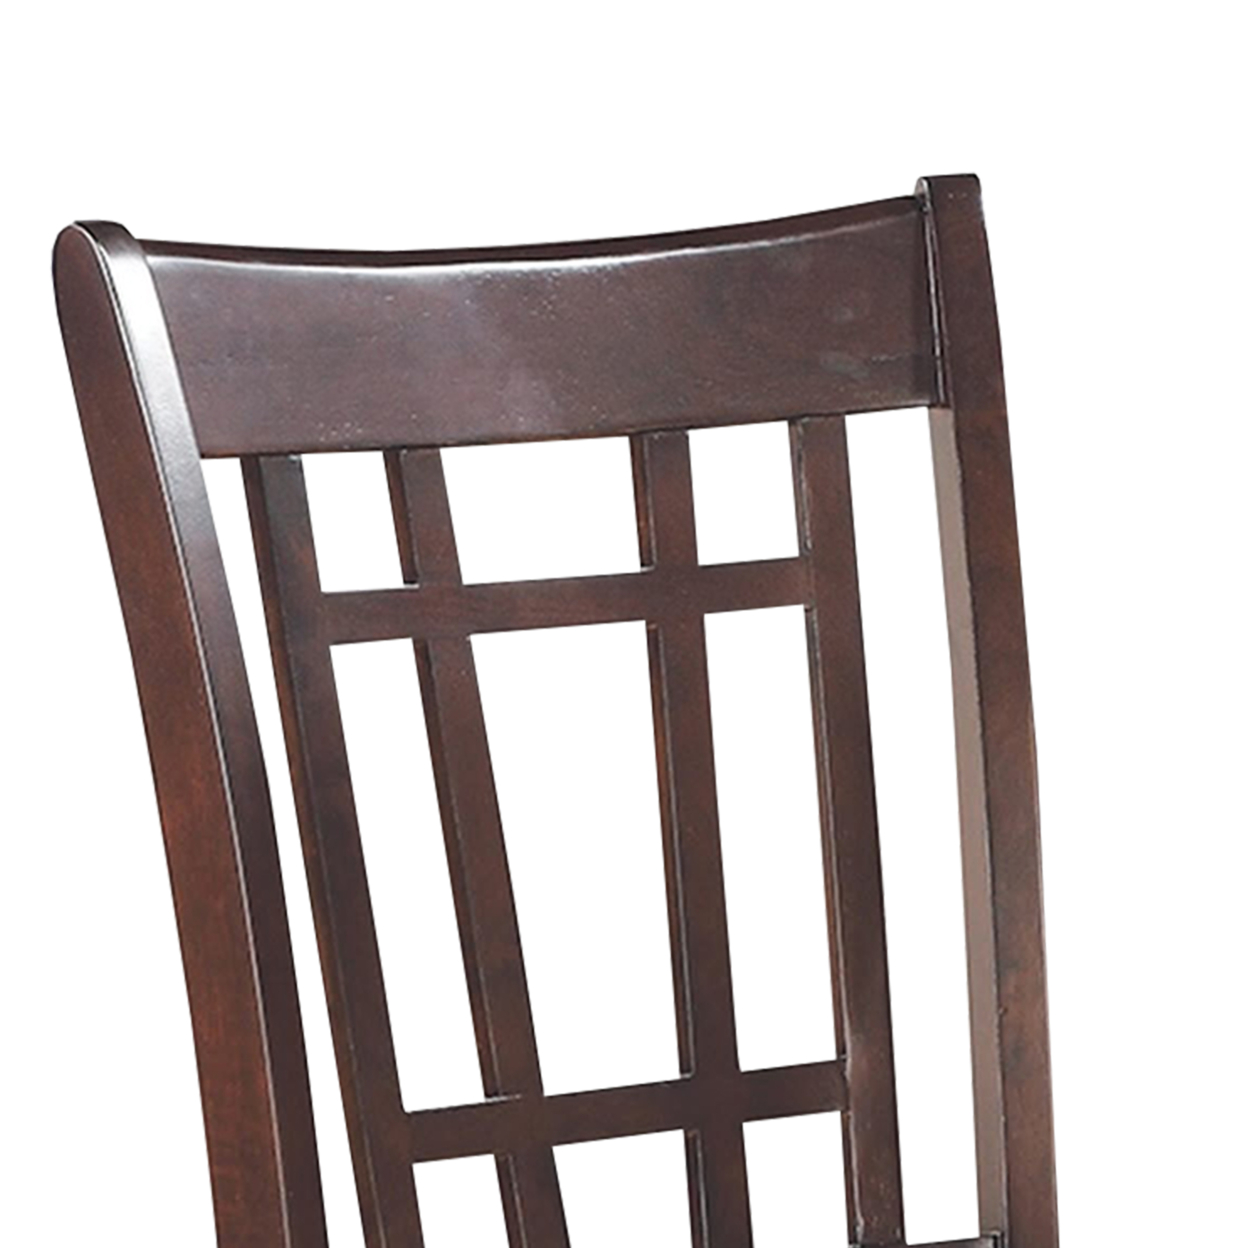 Contemporary Armless Dining Side Chair, Espresso Brown & Black, Set Of 2- Saltoro Sherpi